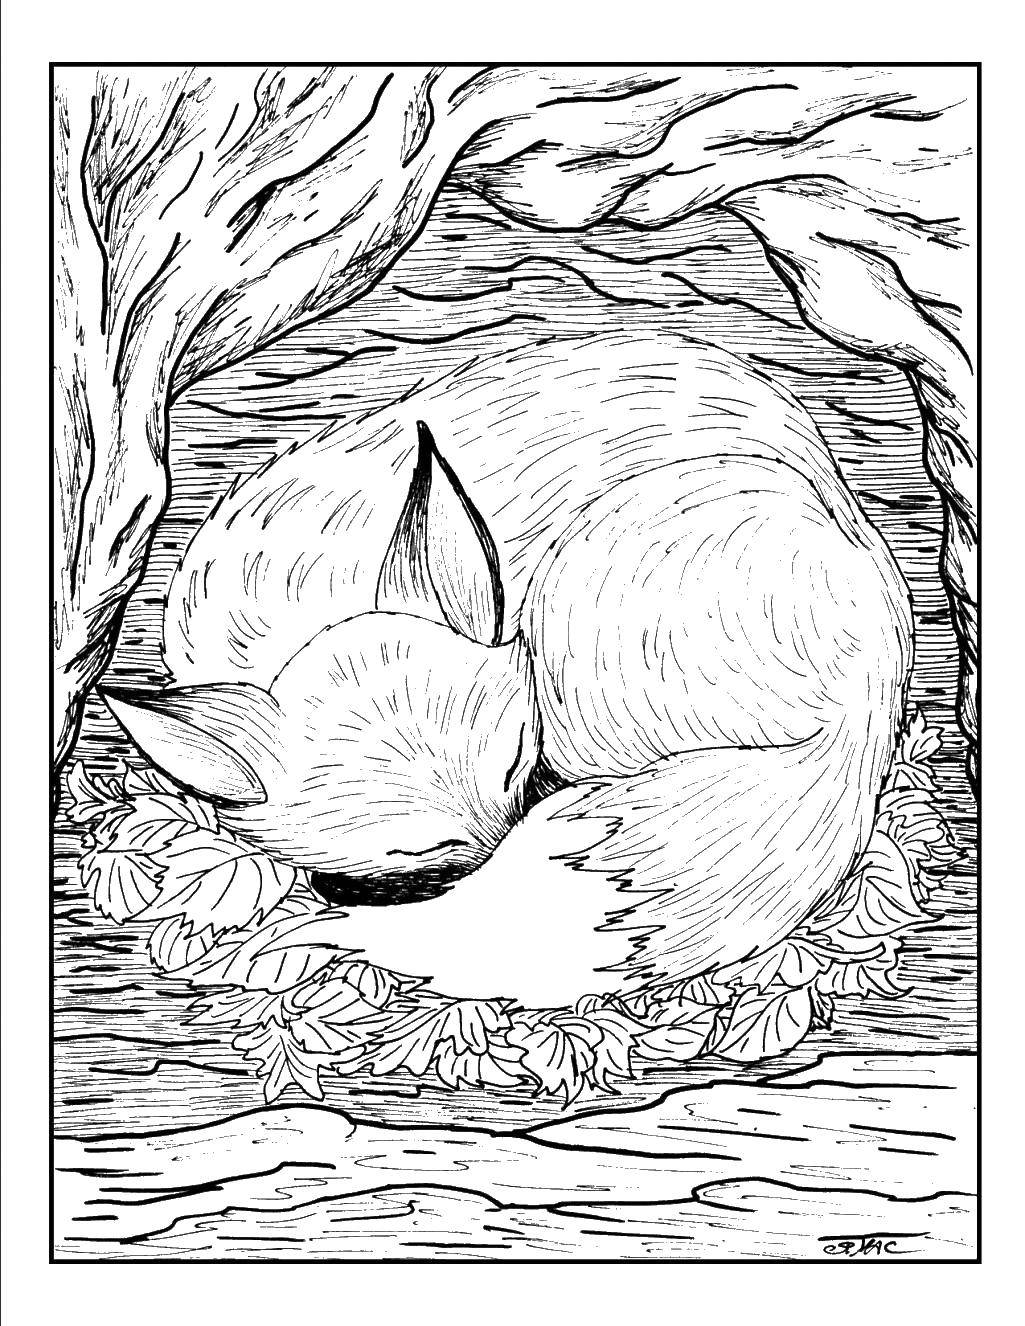 Название: Раскраска Лиса спит в норе. Категория: Животные. Теги: лиса, нора.